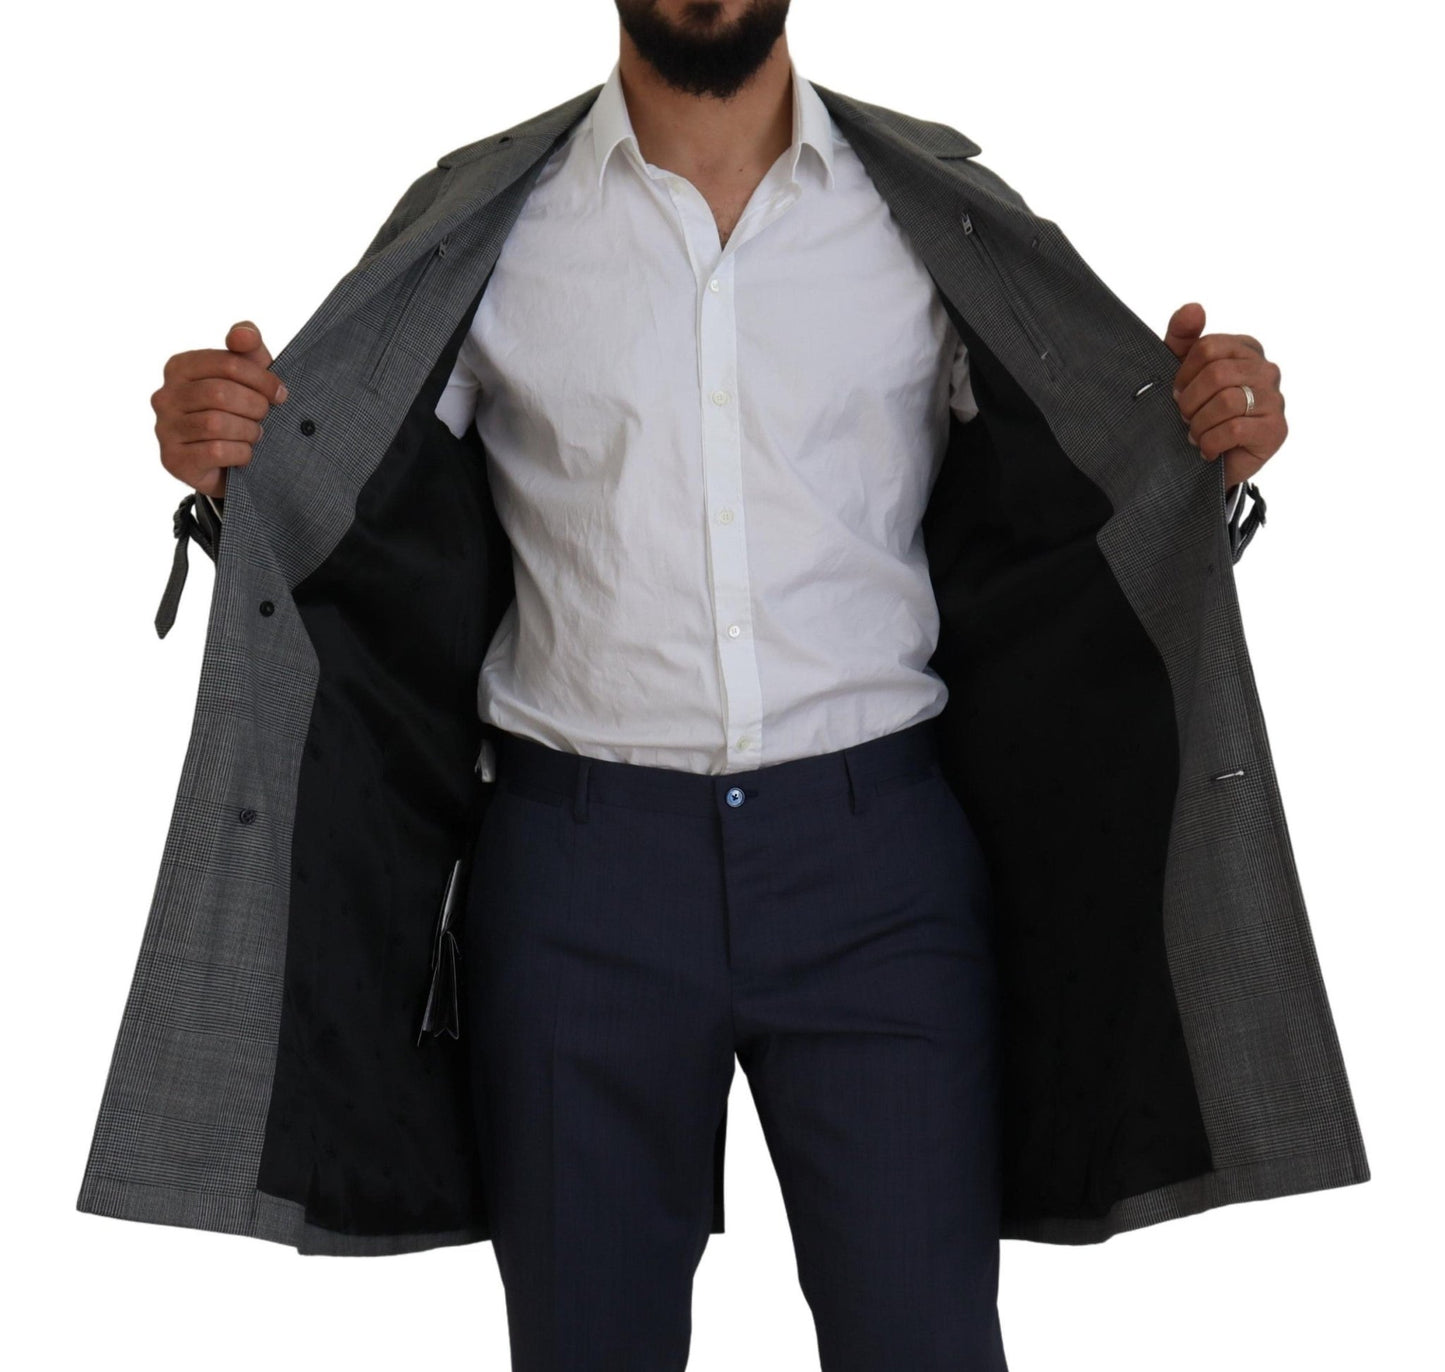 Dolce & Gabbana Gray Wool Plaid Long Trench Coat Jacket Trench Coat Jacket